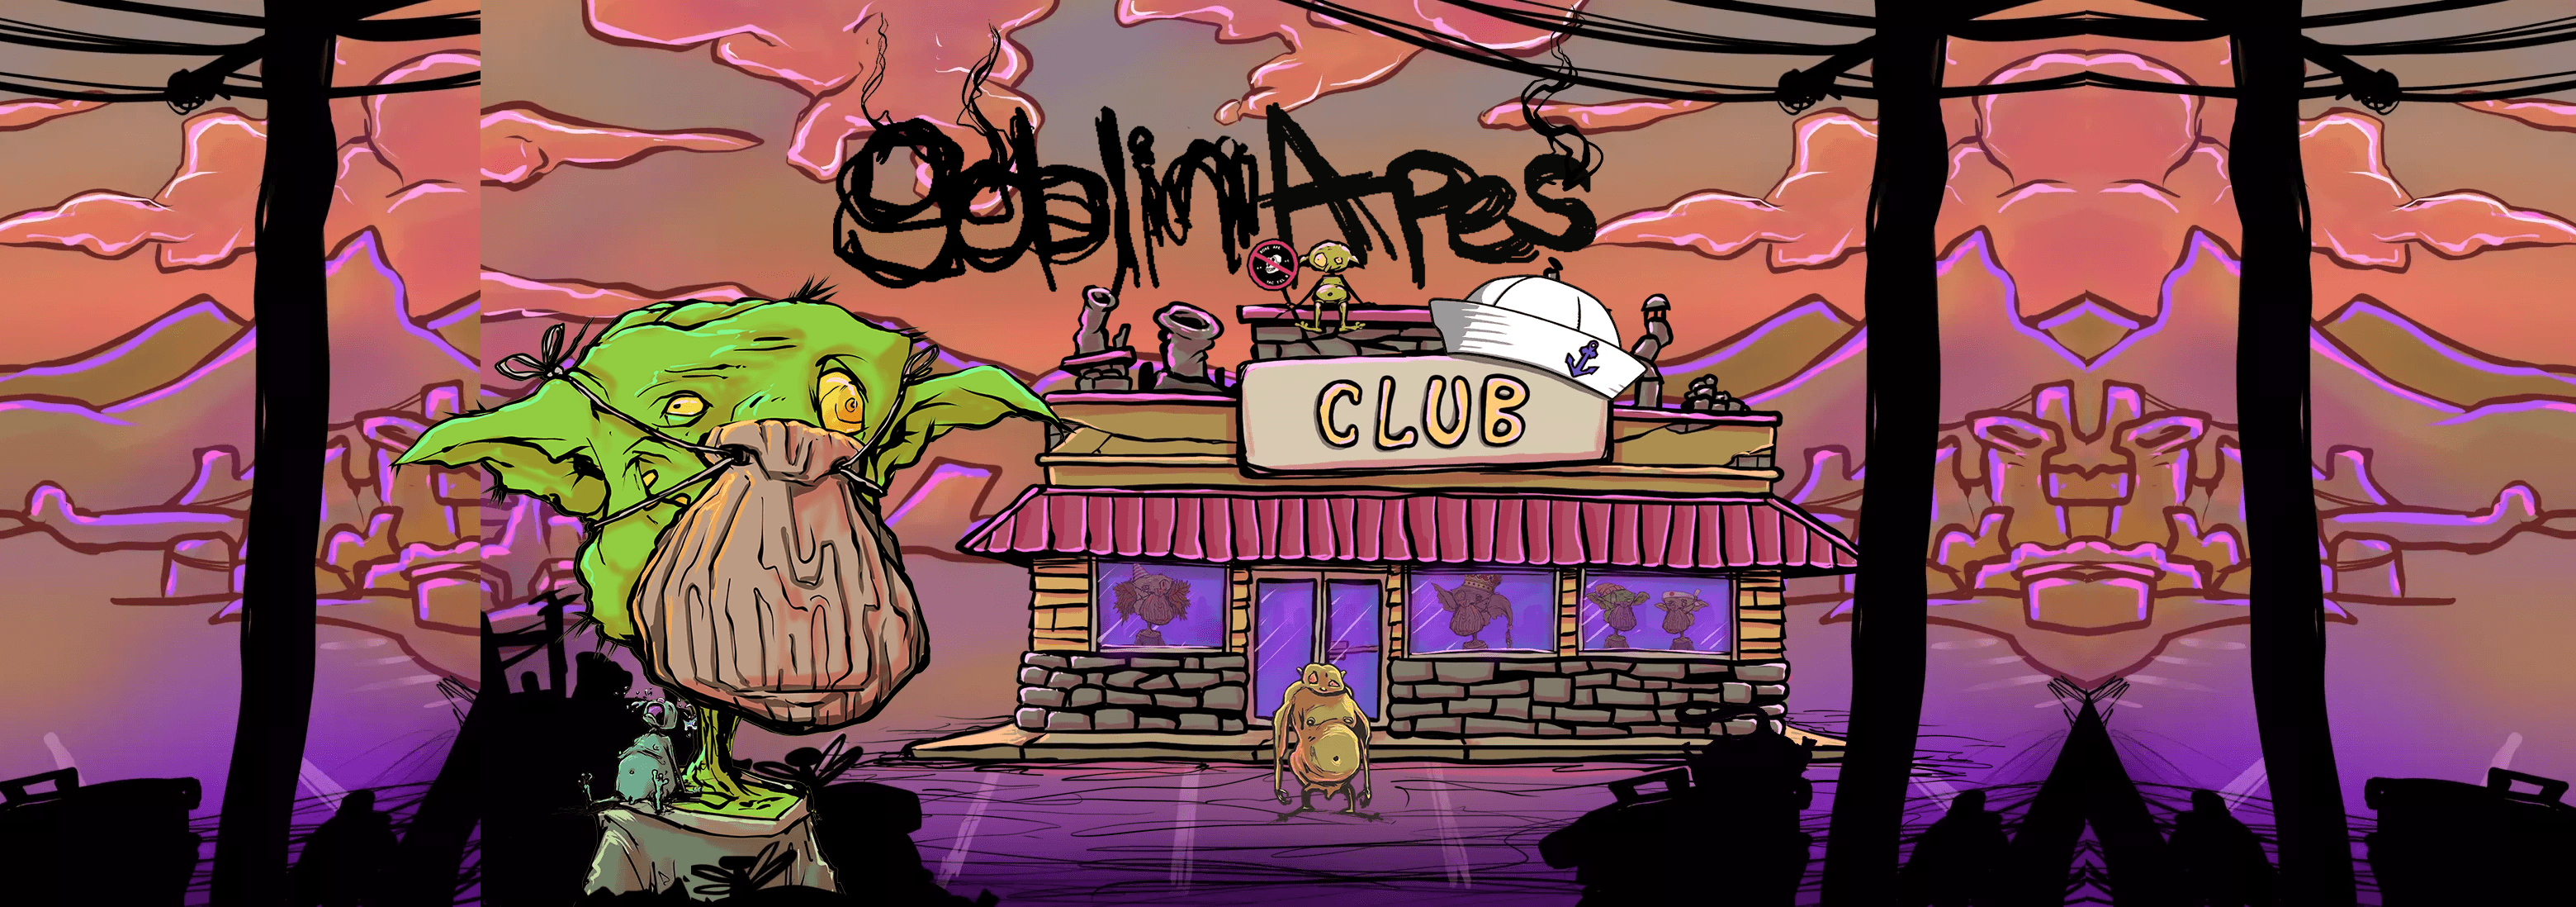 Goblin Apes Club